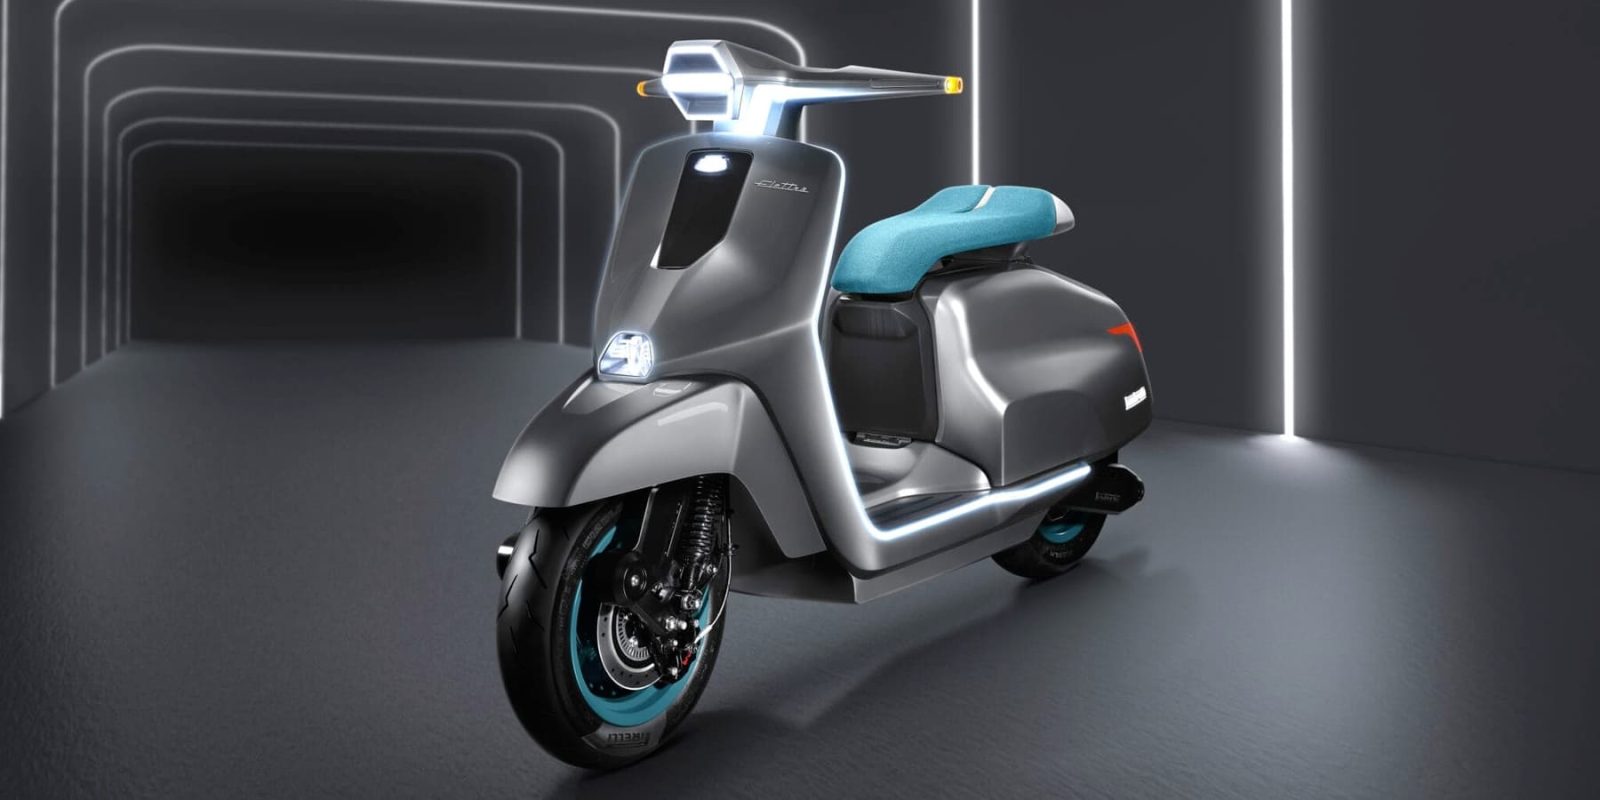 Lambretta's hot new electric scooter makes Vespa's same mistake